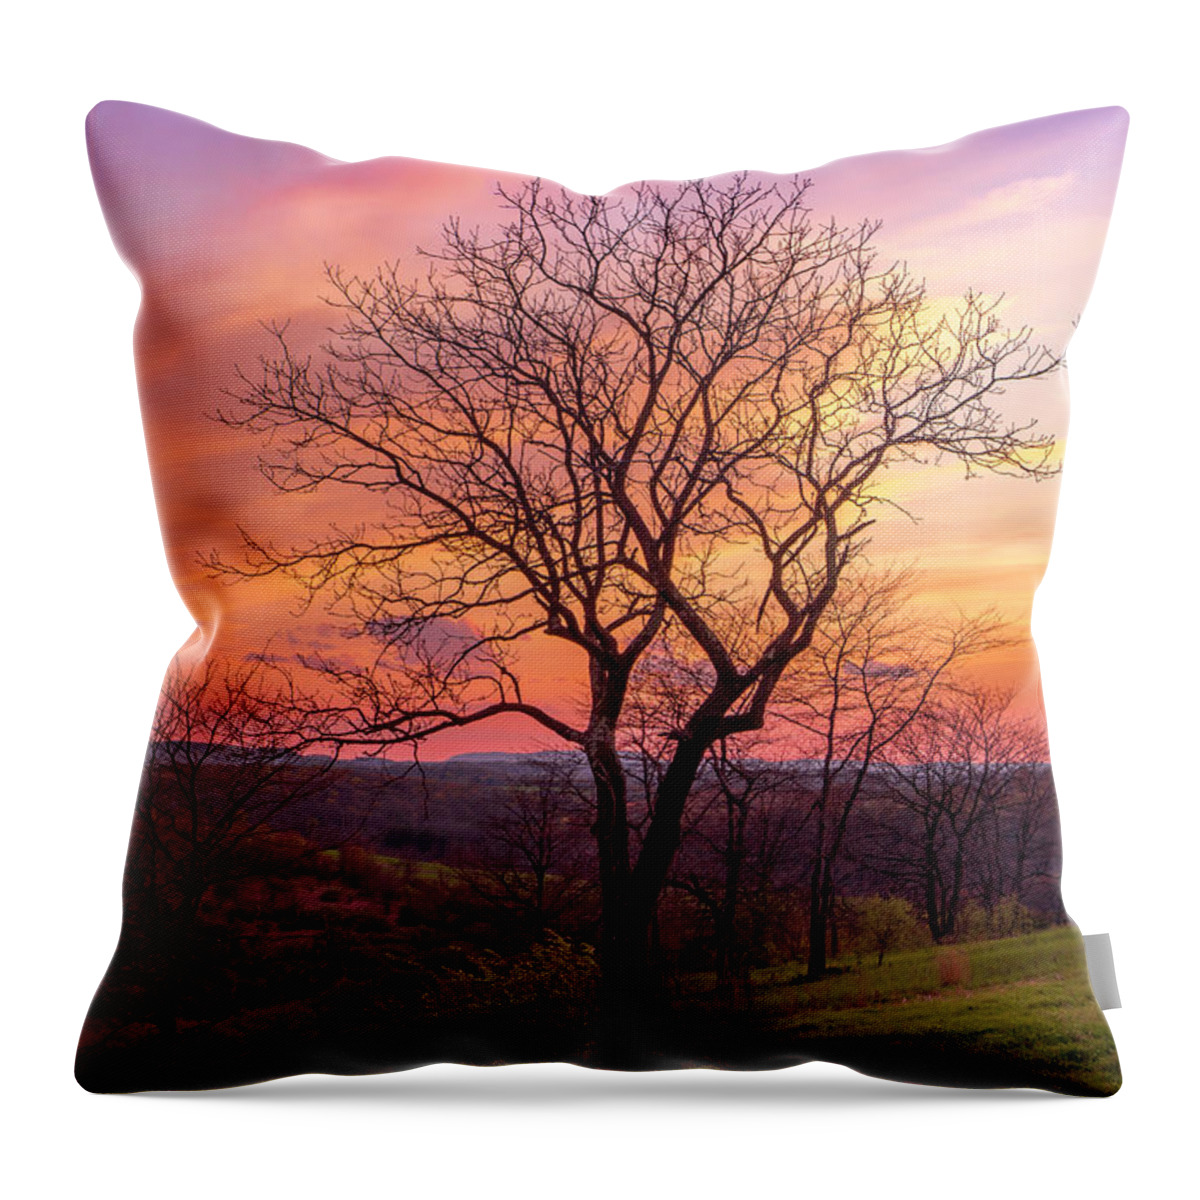 Sunset Throw Pillow featuring the photograph Blue Hour Sunset Trexler Nature Preserve by Jason Fink